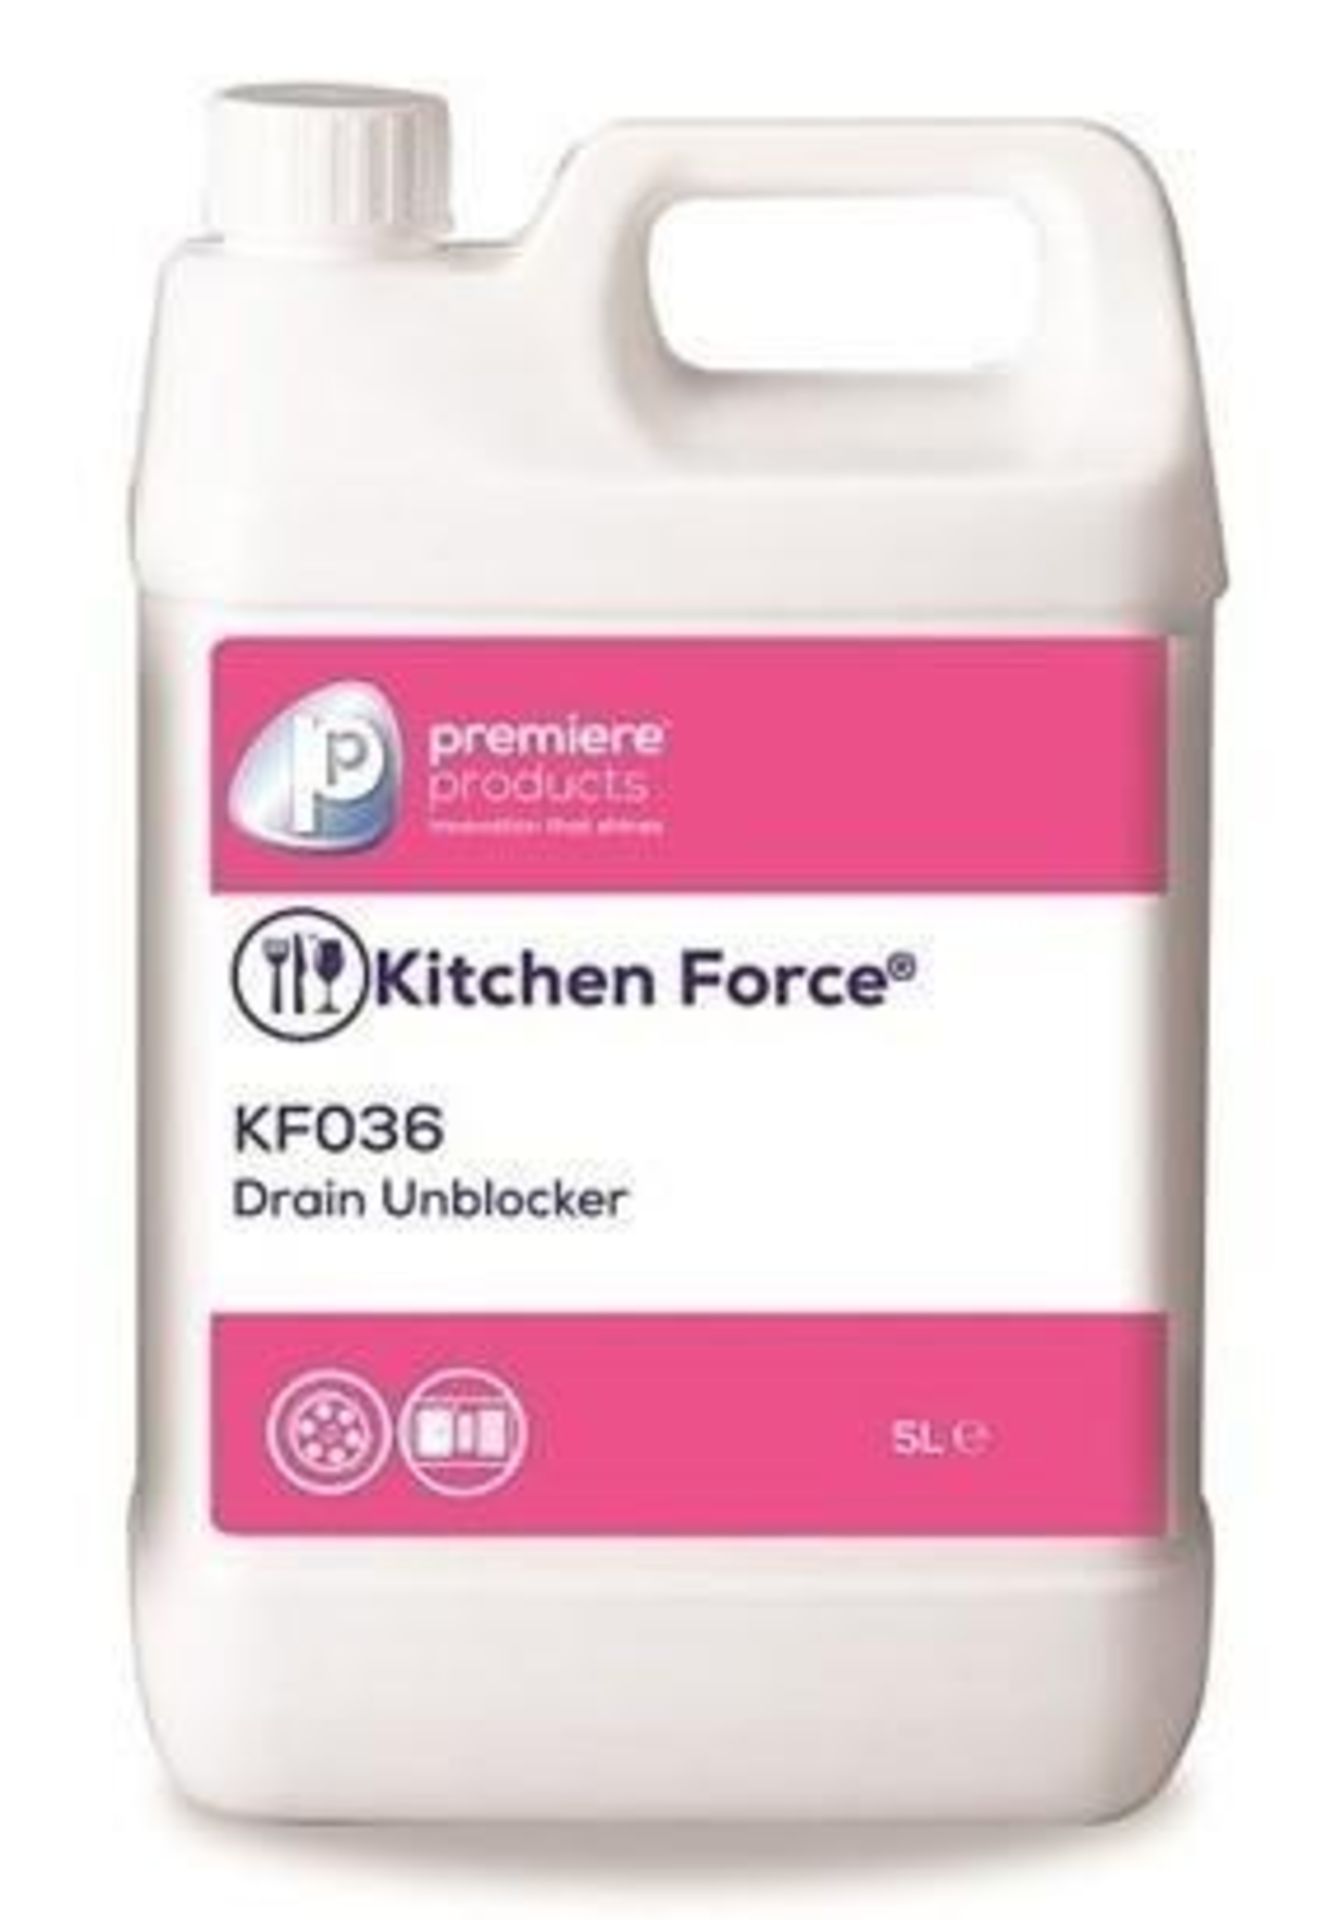 2 x Kitchen Force 5 Litre Drain Unblocker - Premiere Products - Rapidly Breaks Down Blockages Caused